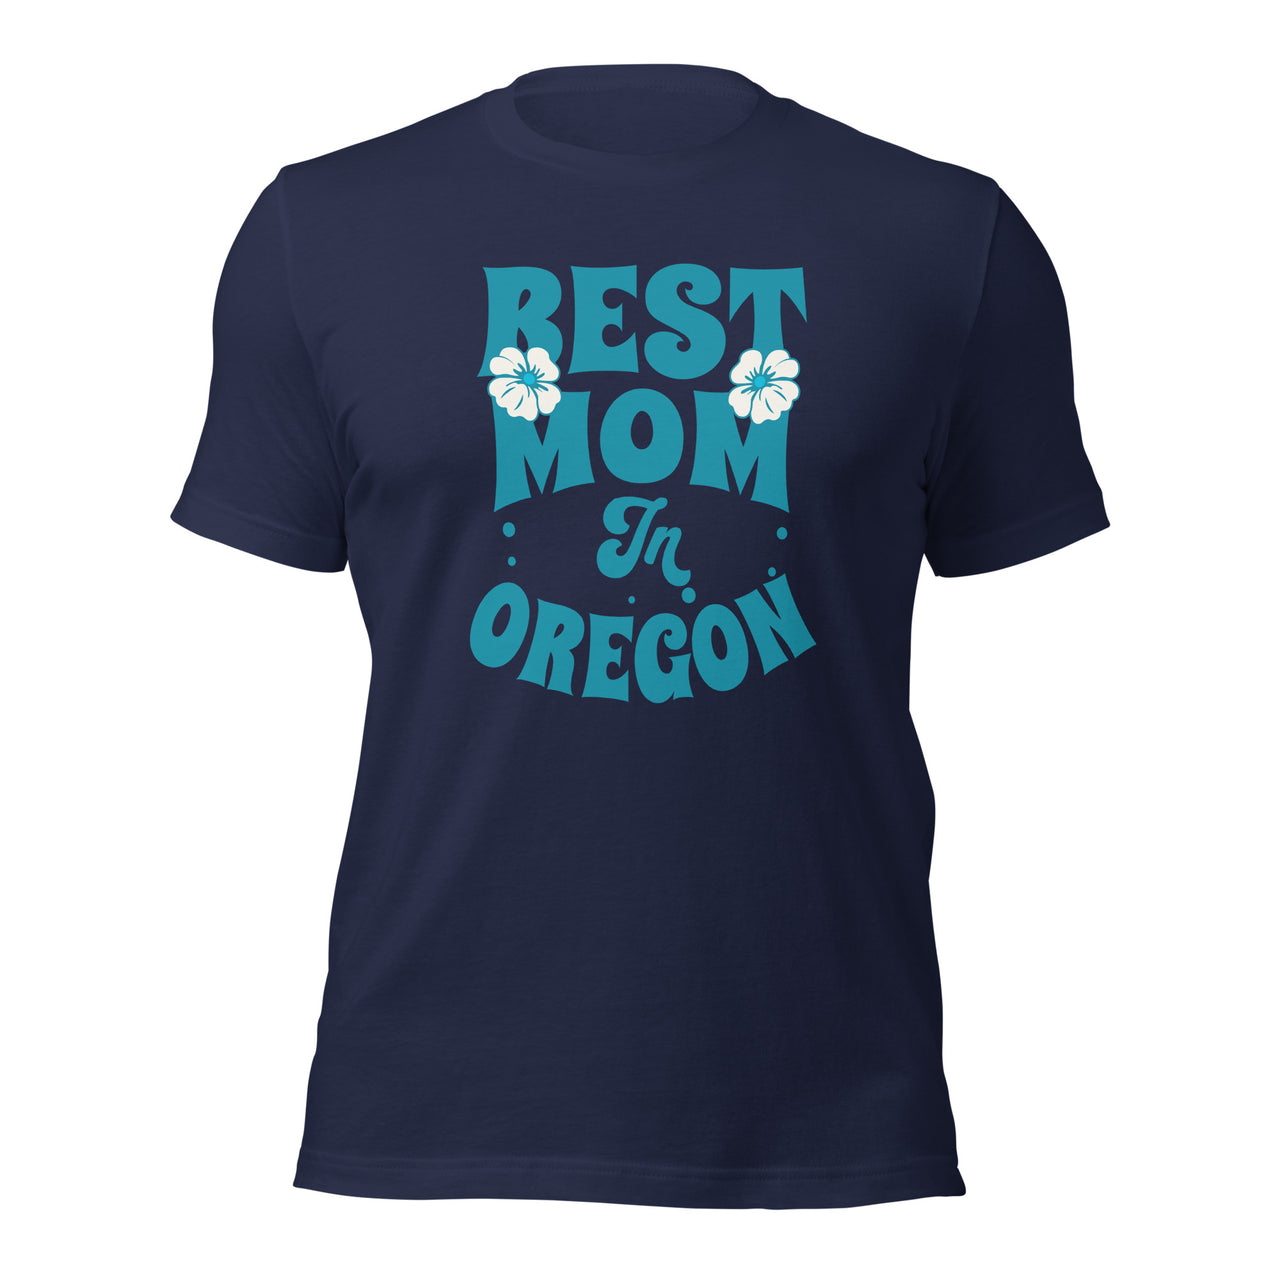 Best Mom in Oregon - Unisex t-shirt